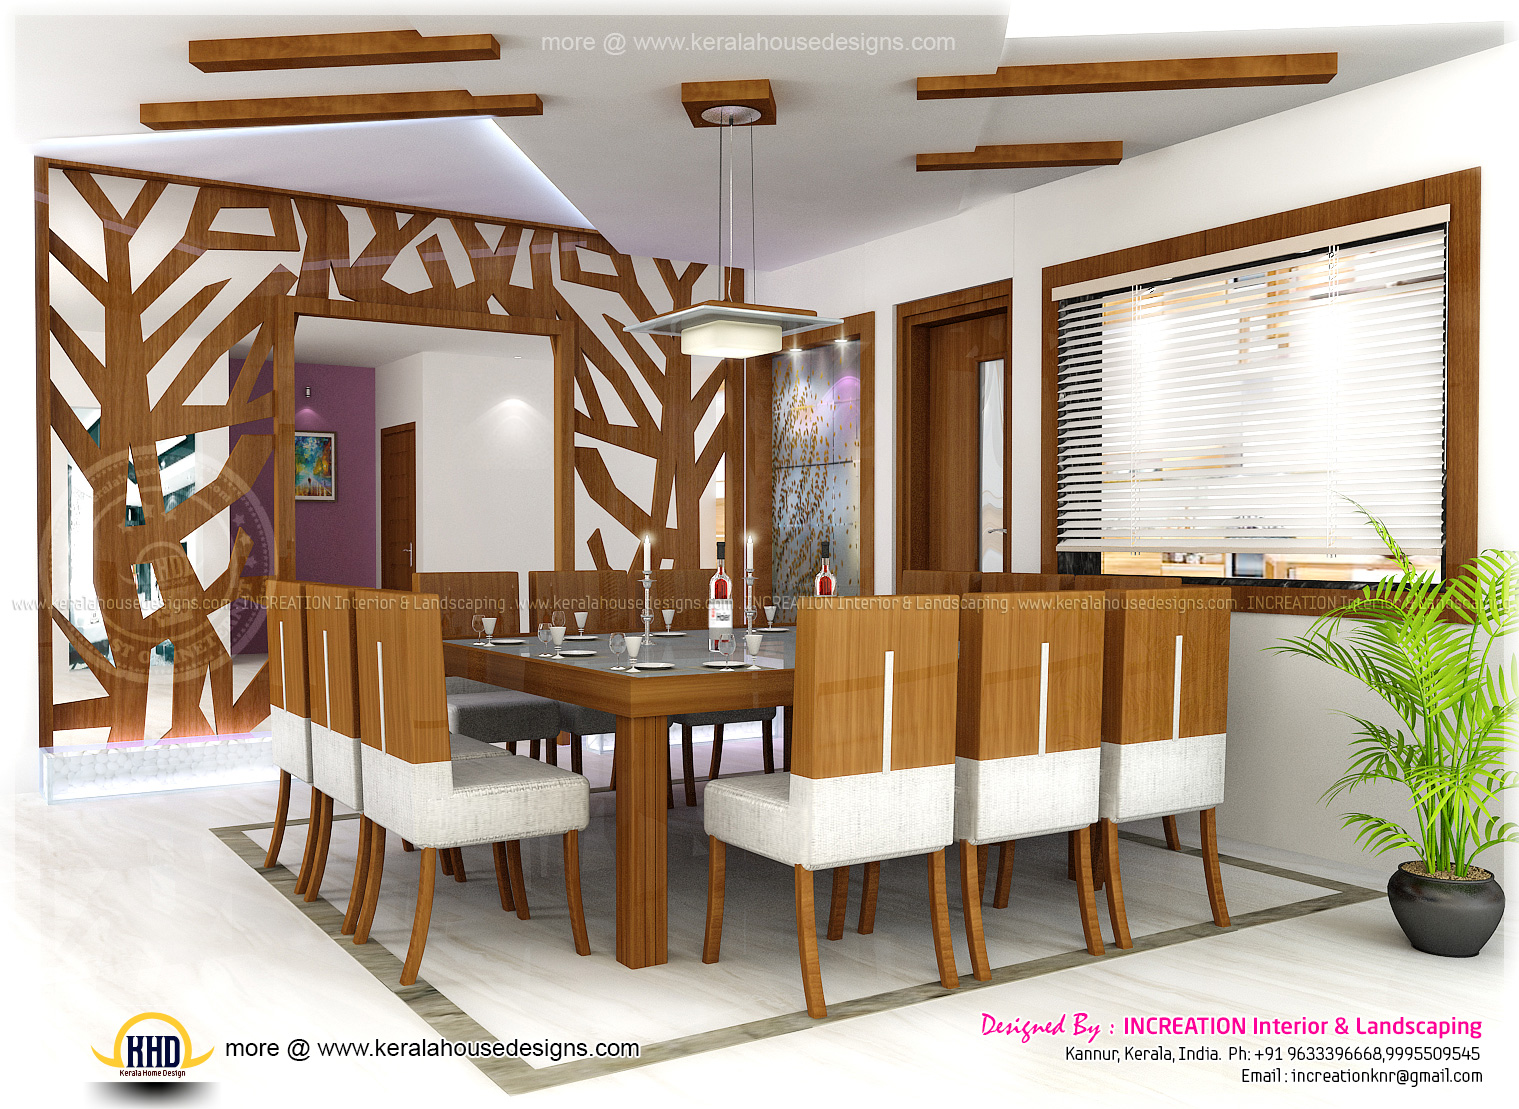 Interior designs from Kannur, Kerala | Home Kerala Plans